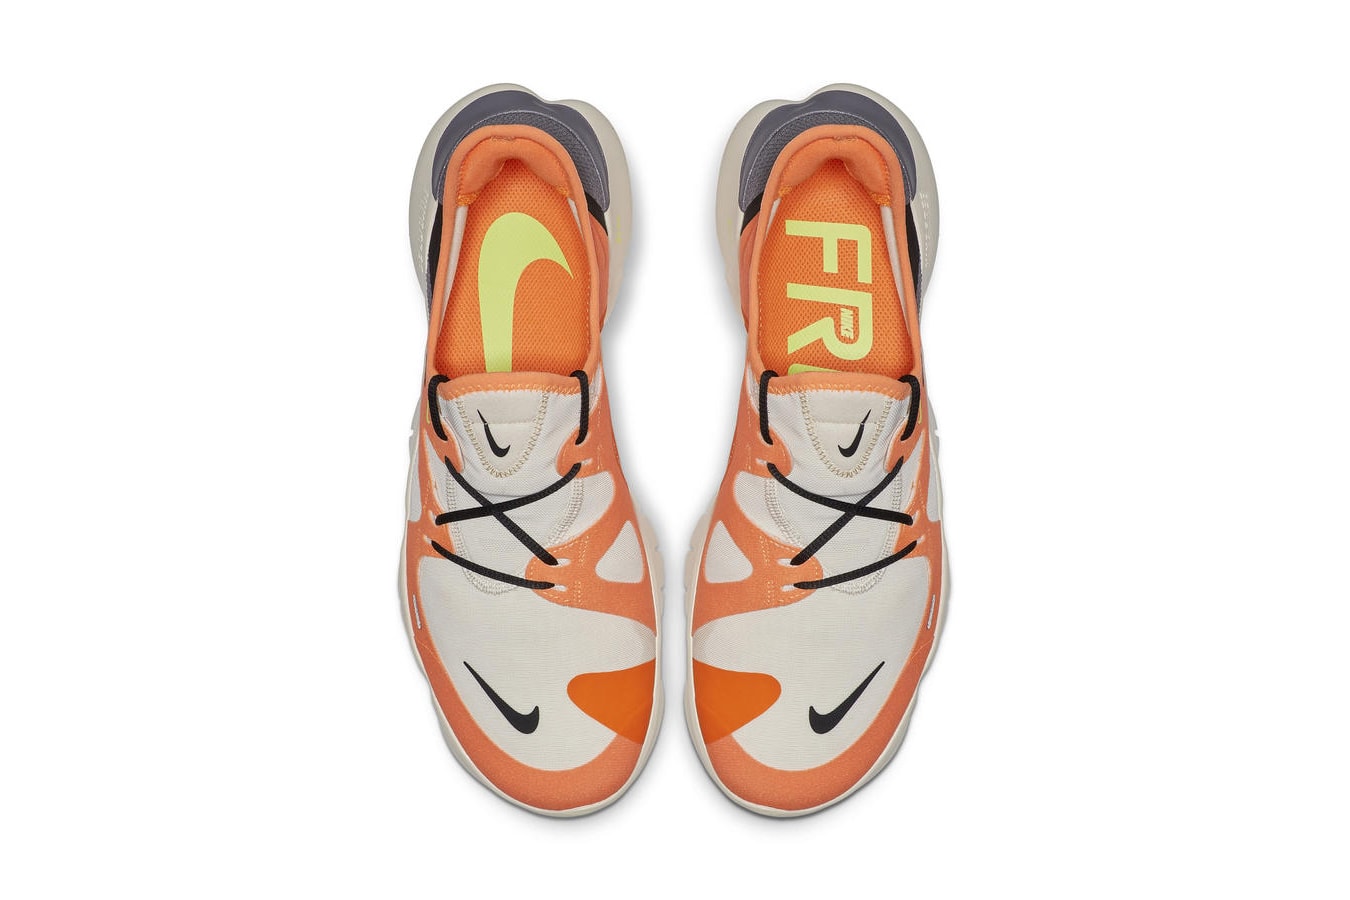 Nike 全新 2019 Free Running 跑鞋系列登場